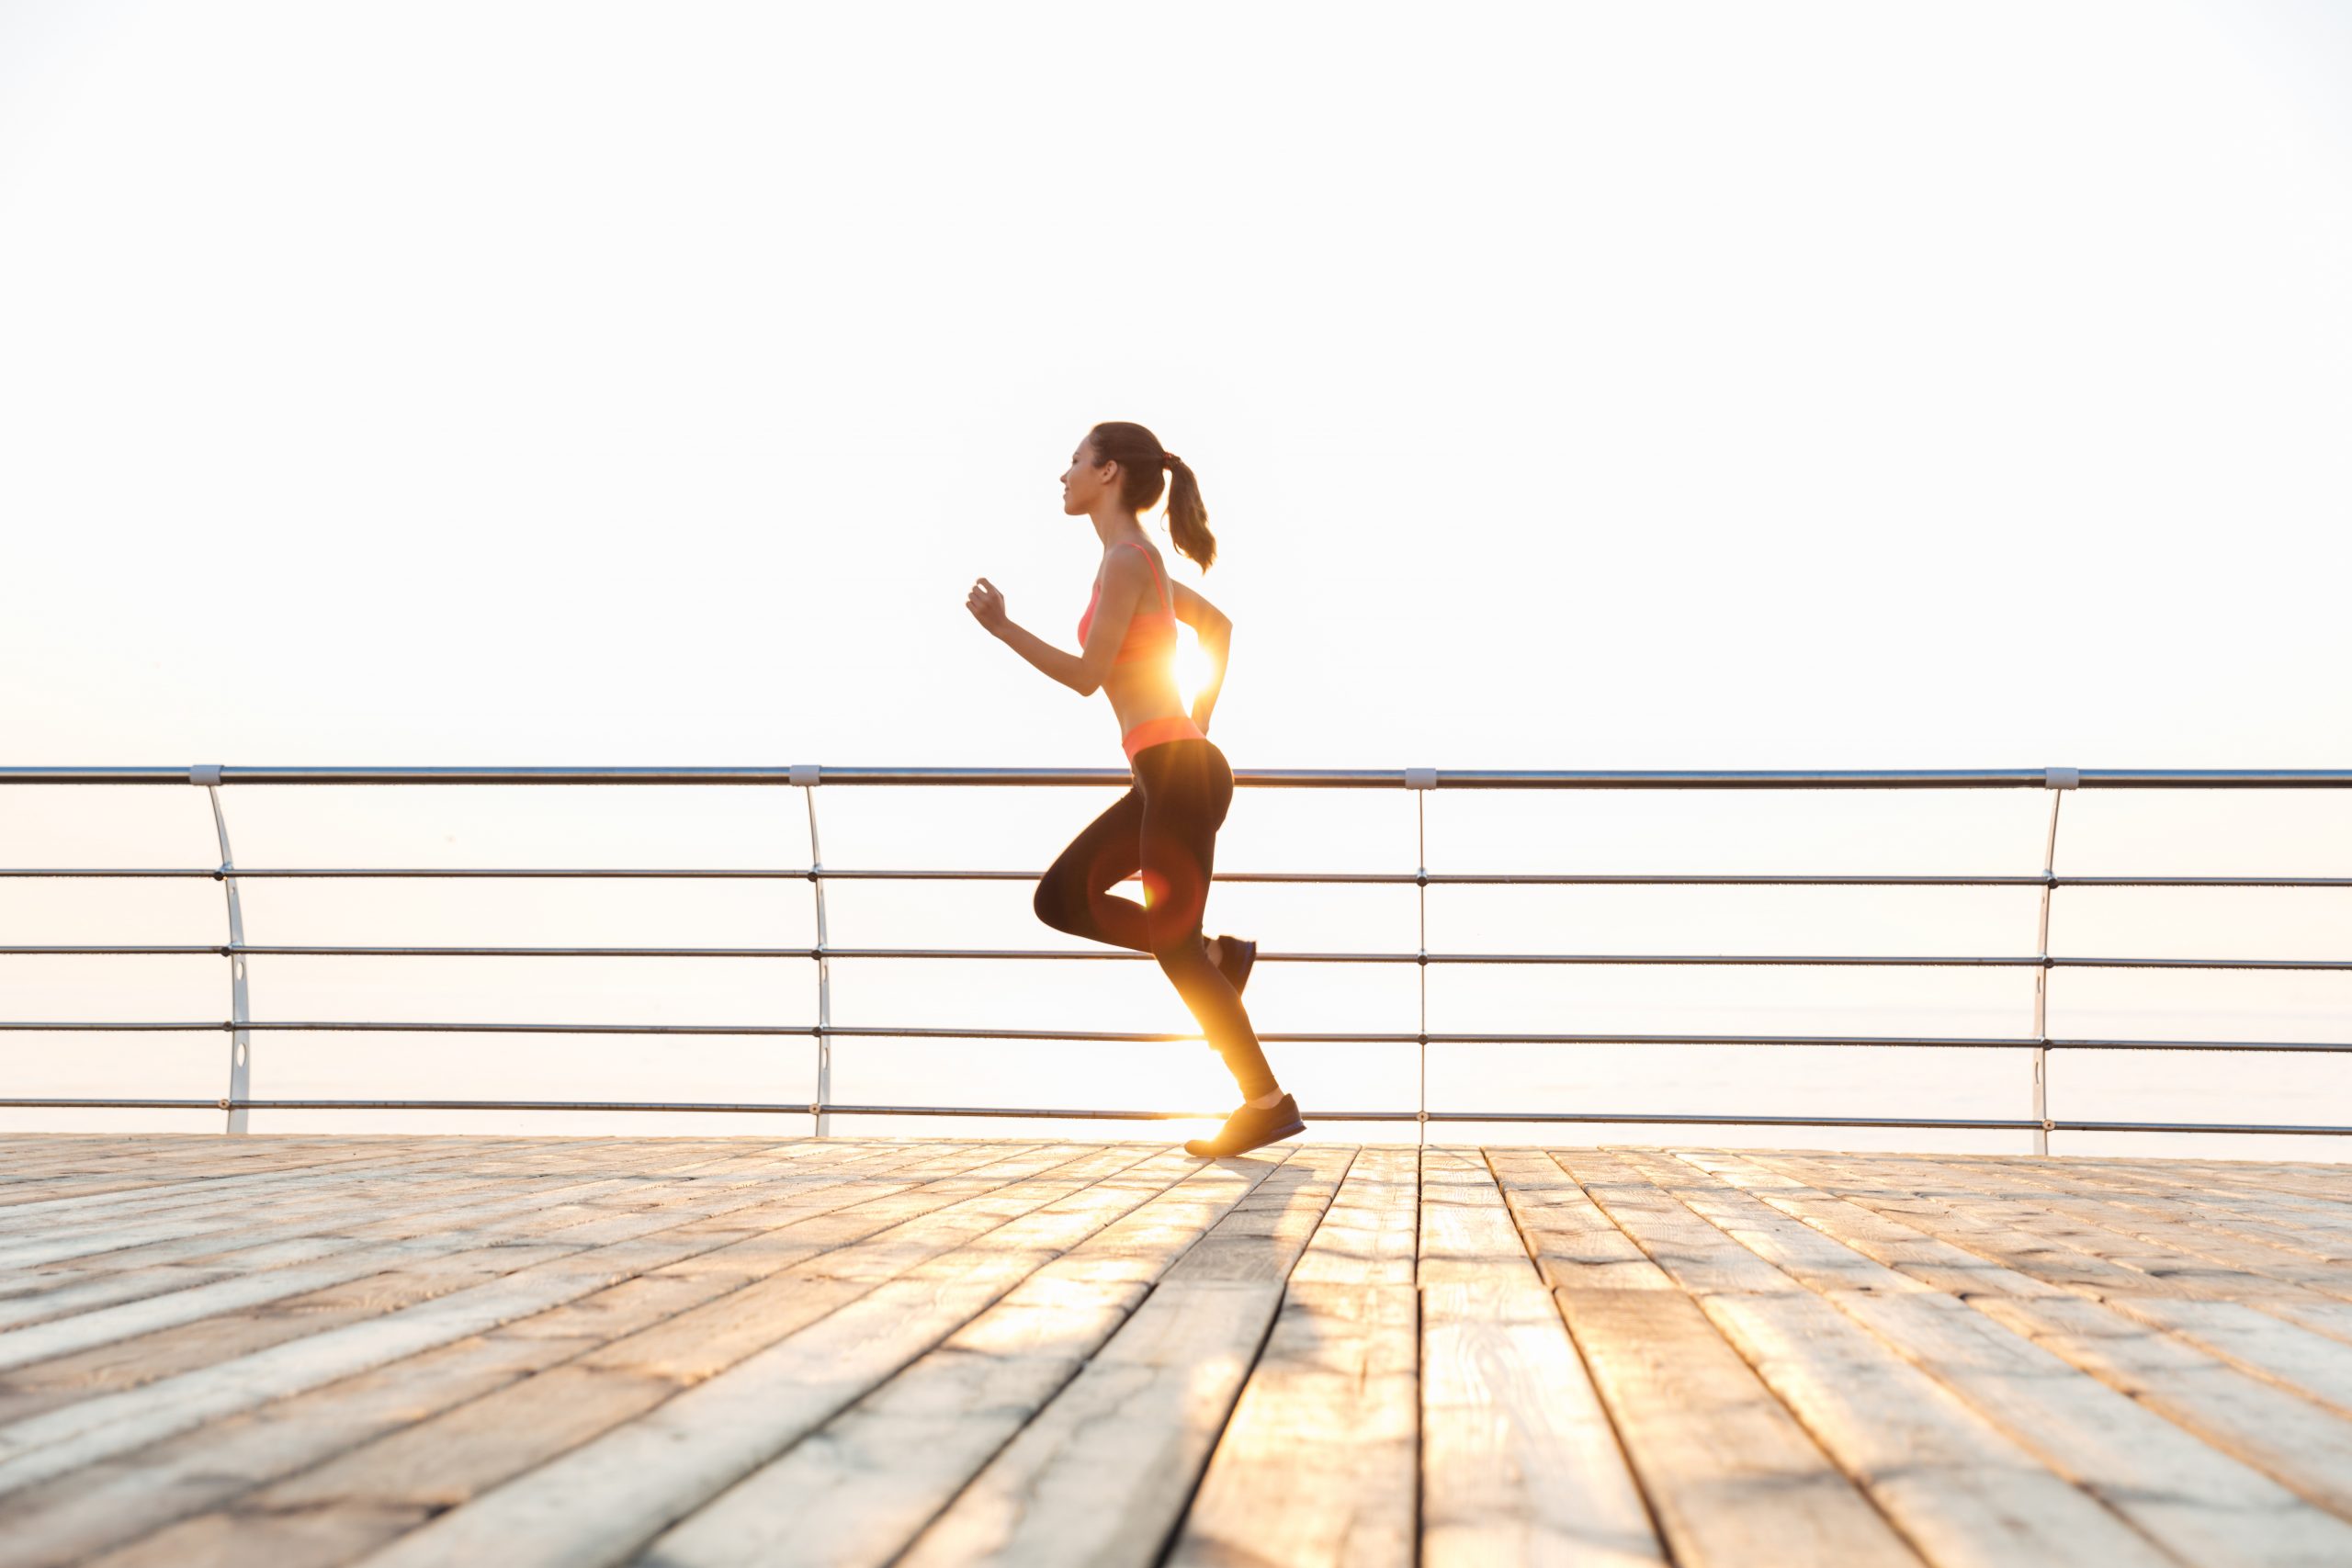 Girls’ Self-Esteem is Boosted by Running Program